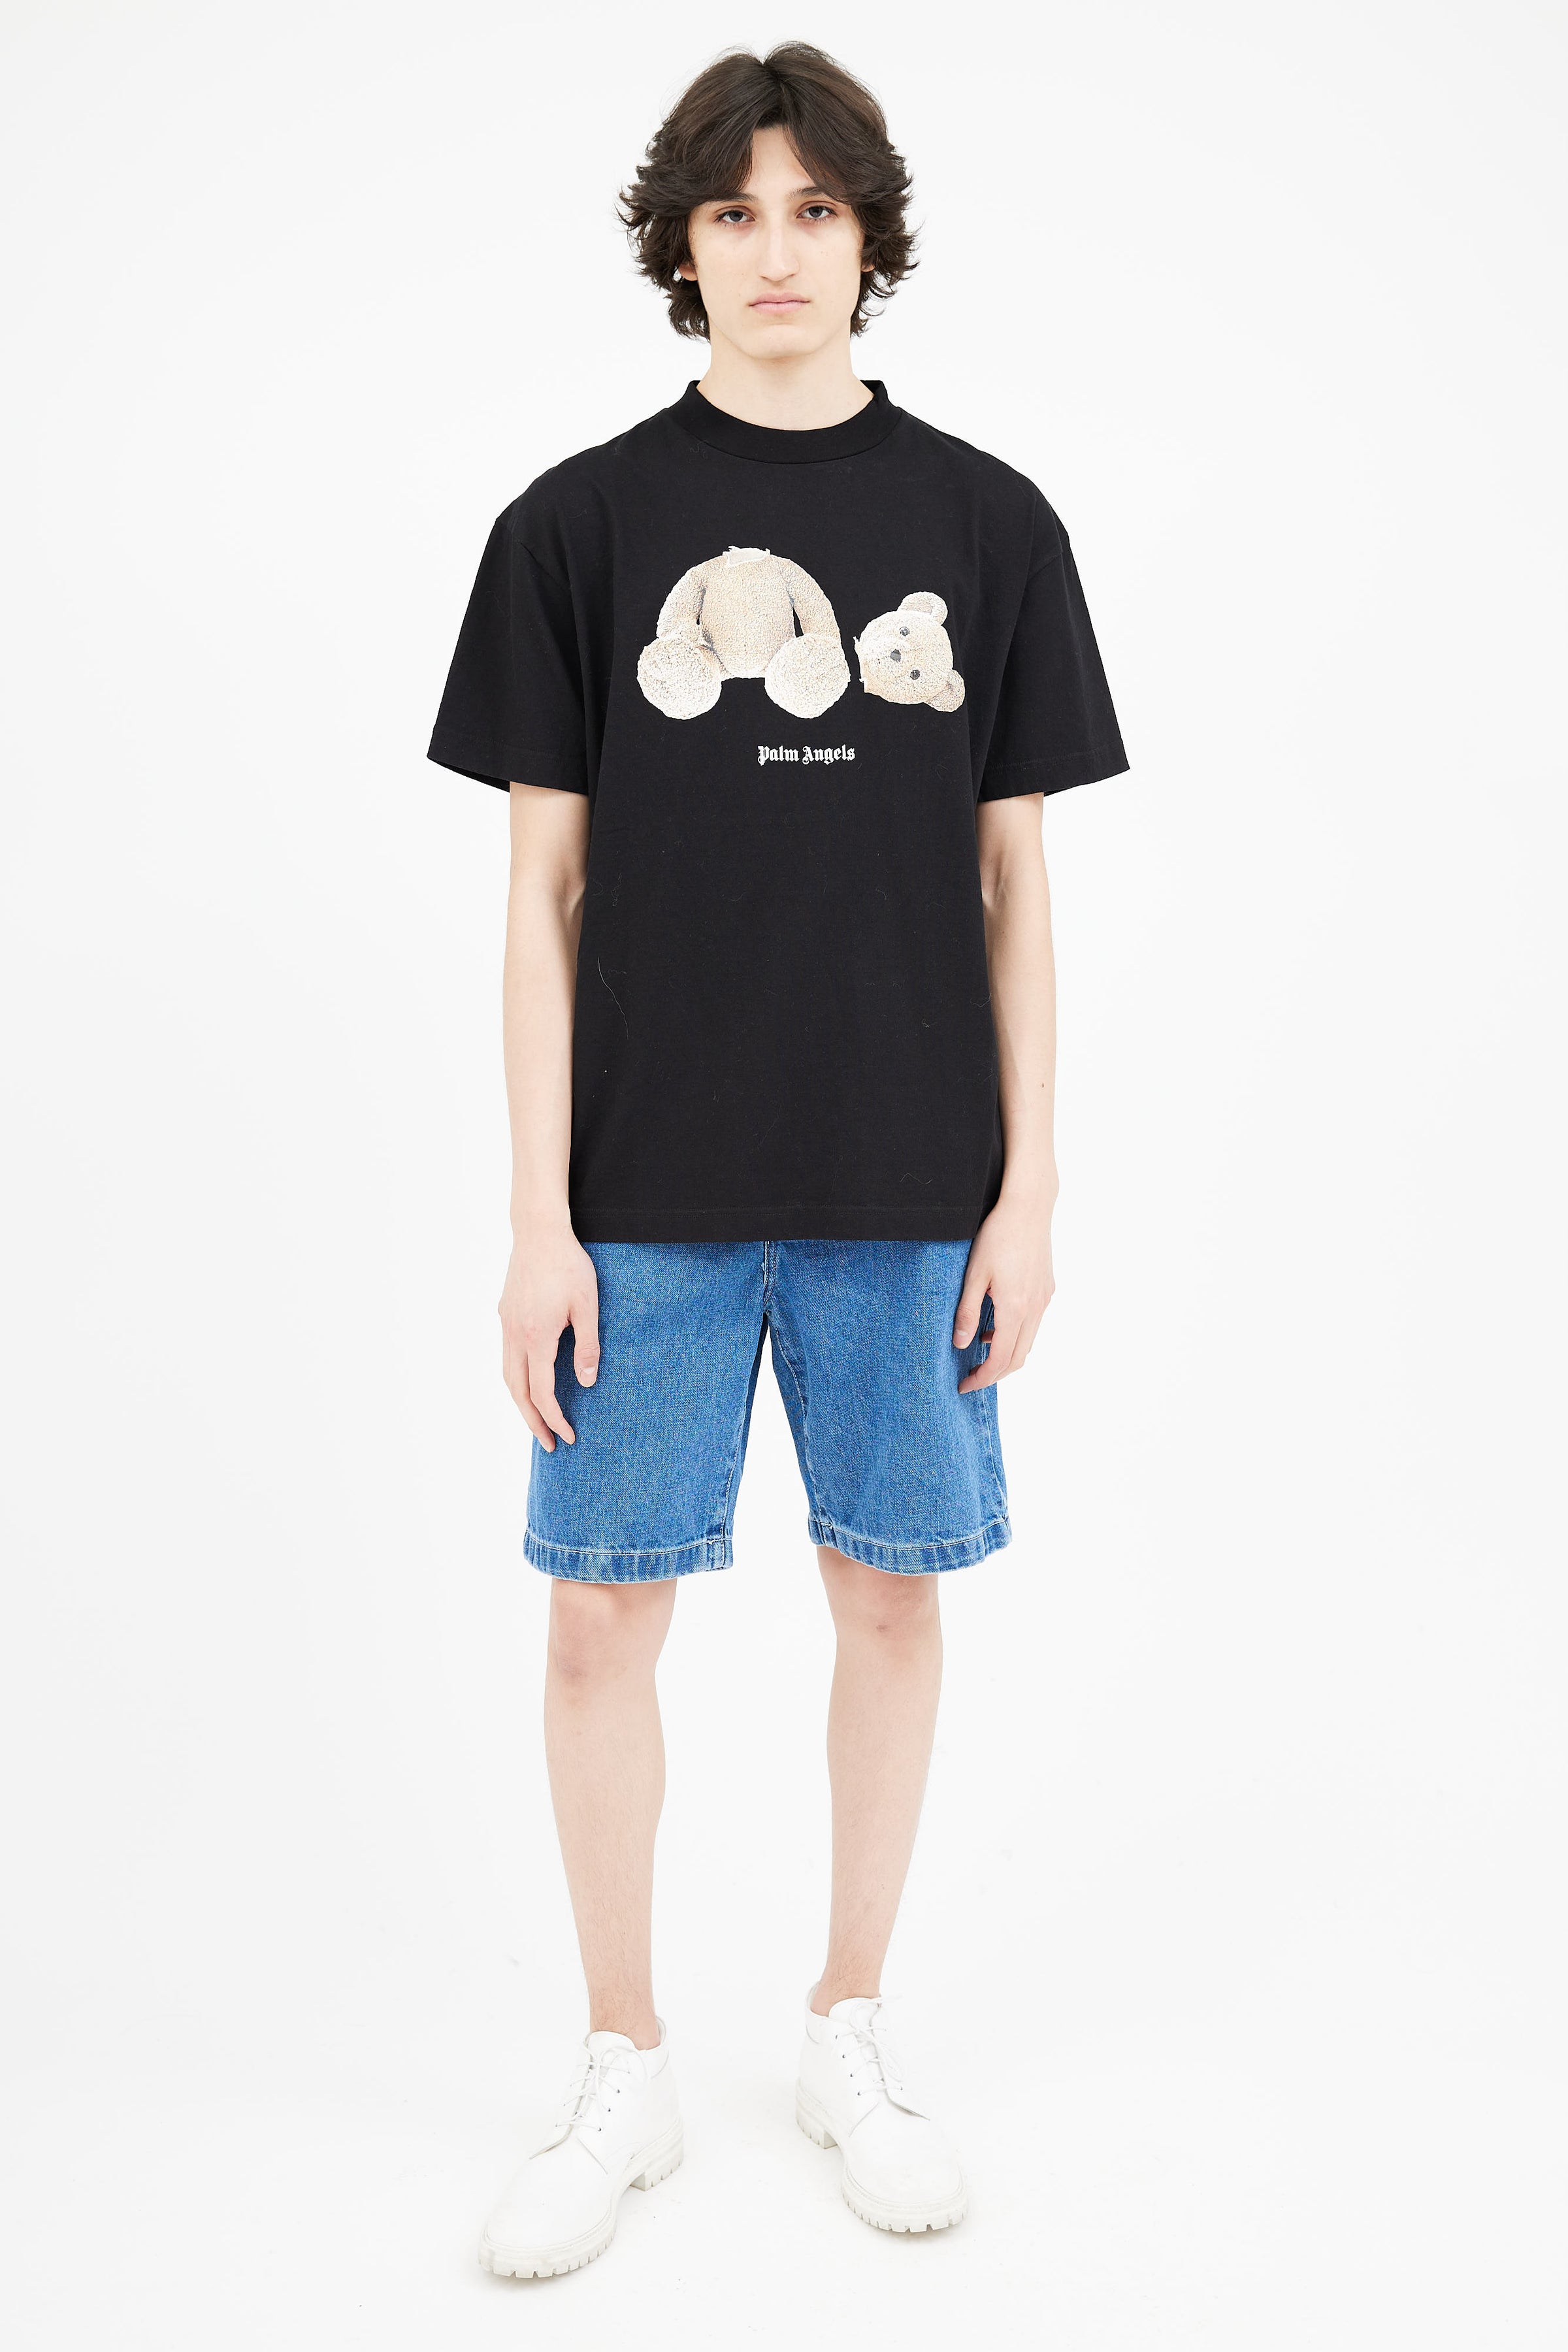 Palm Angels Teddy Bear Men's T-Shirt Black Size Large 100% Authentic